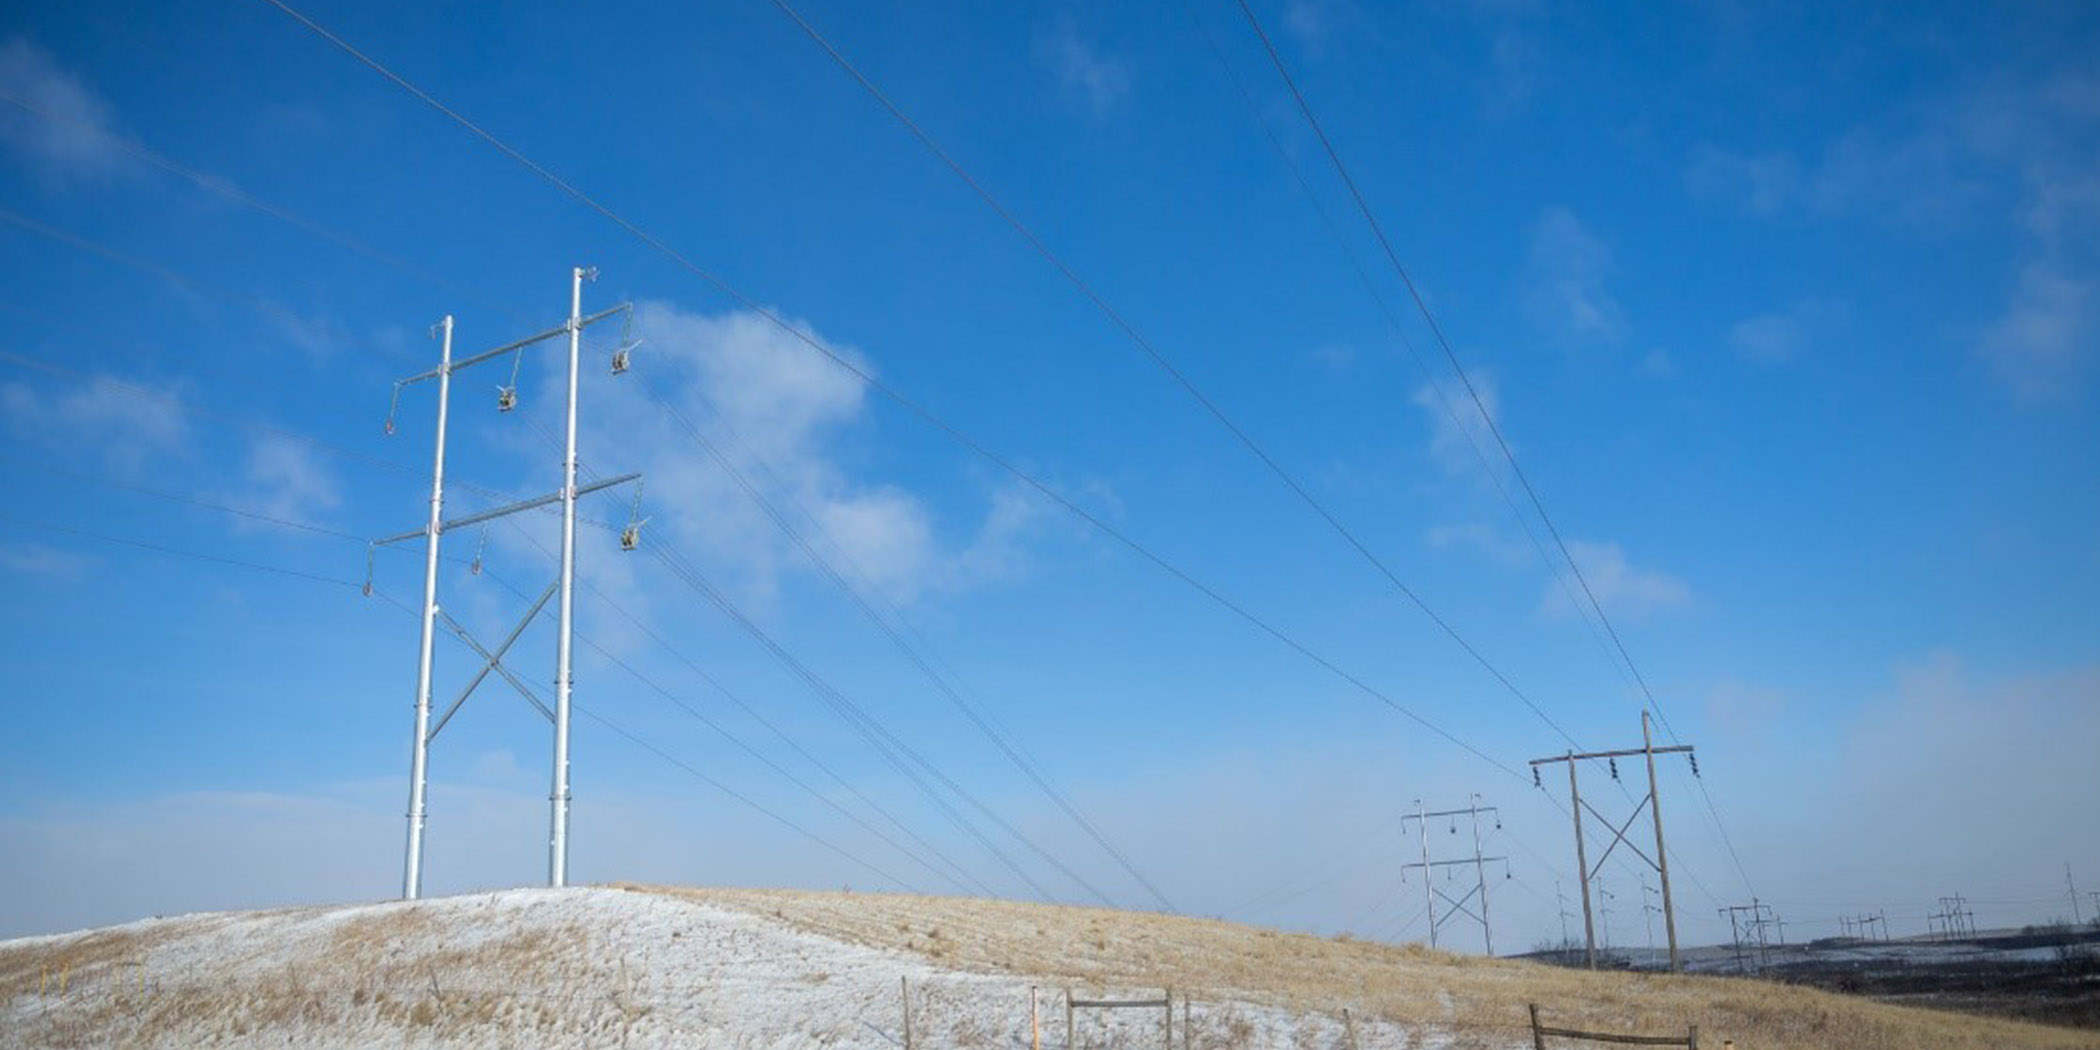 Cross arm transmission lines seen in a field